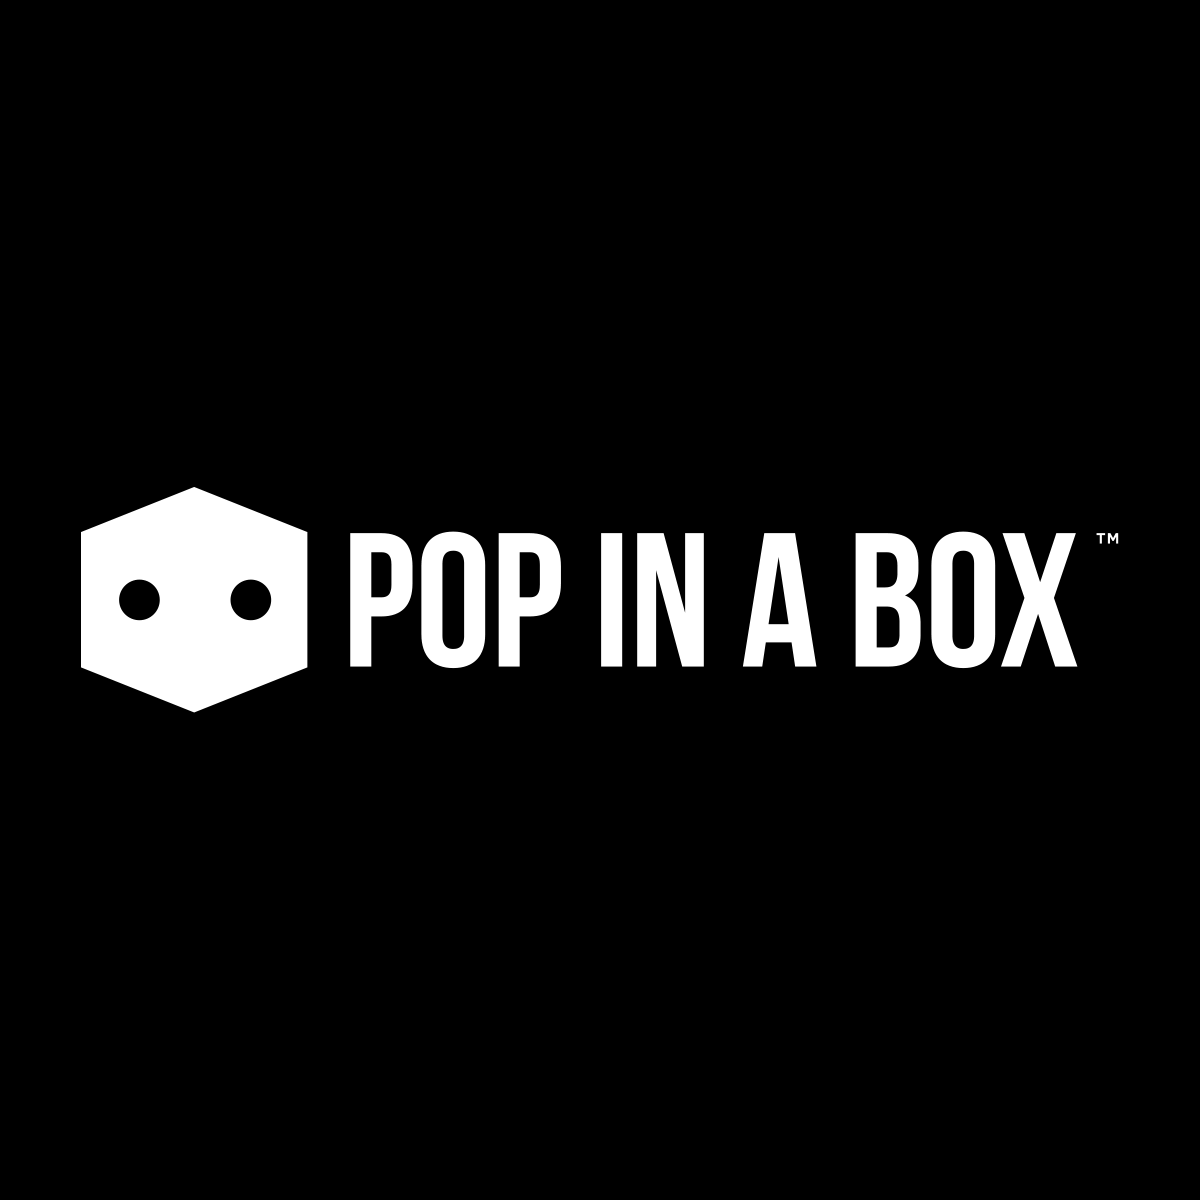 www.popinabox.co.uk